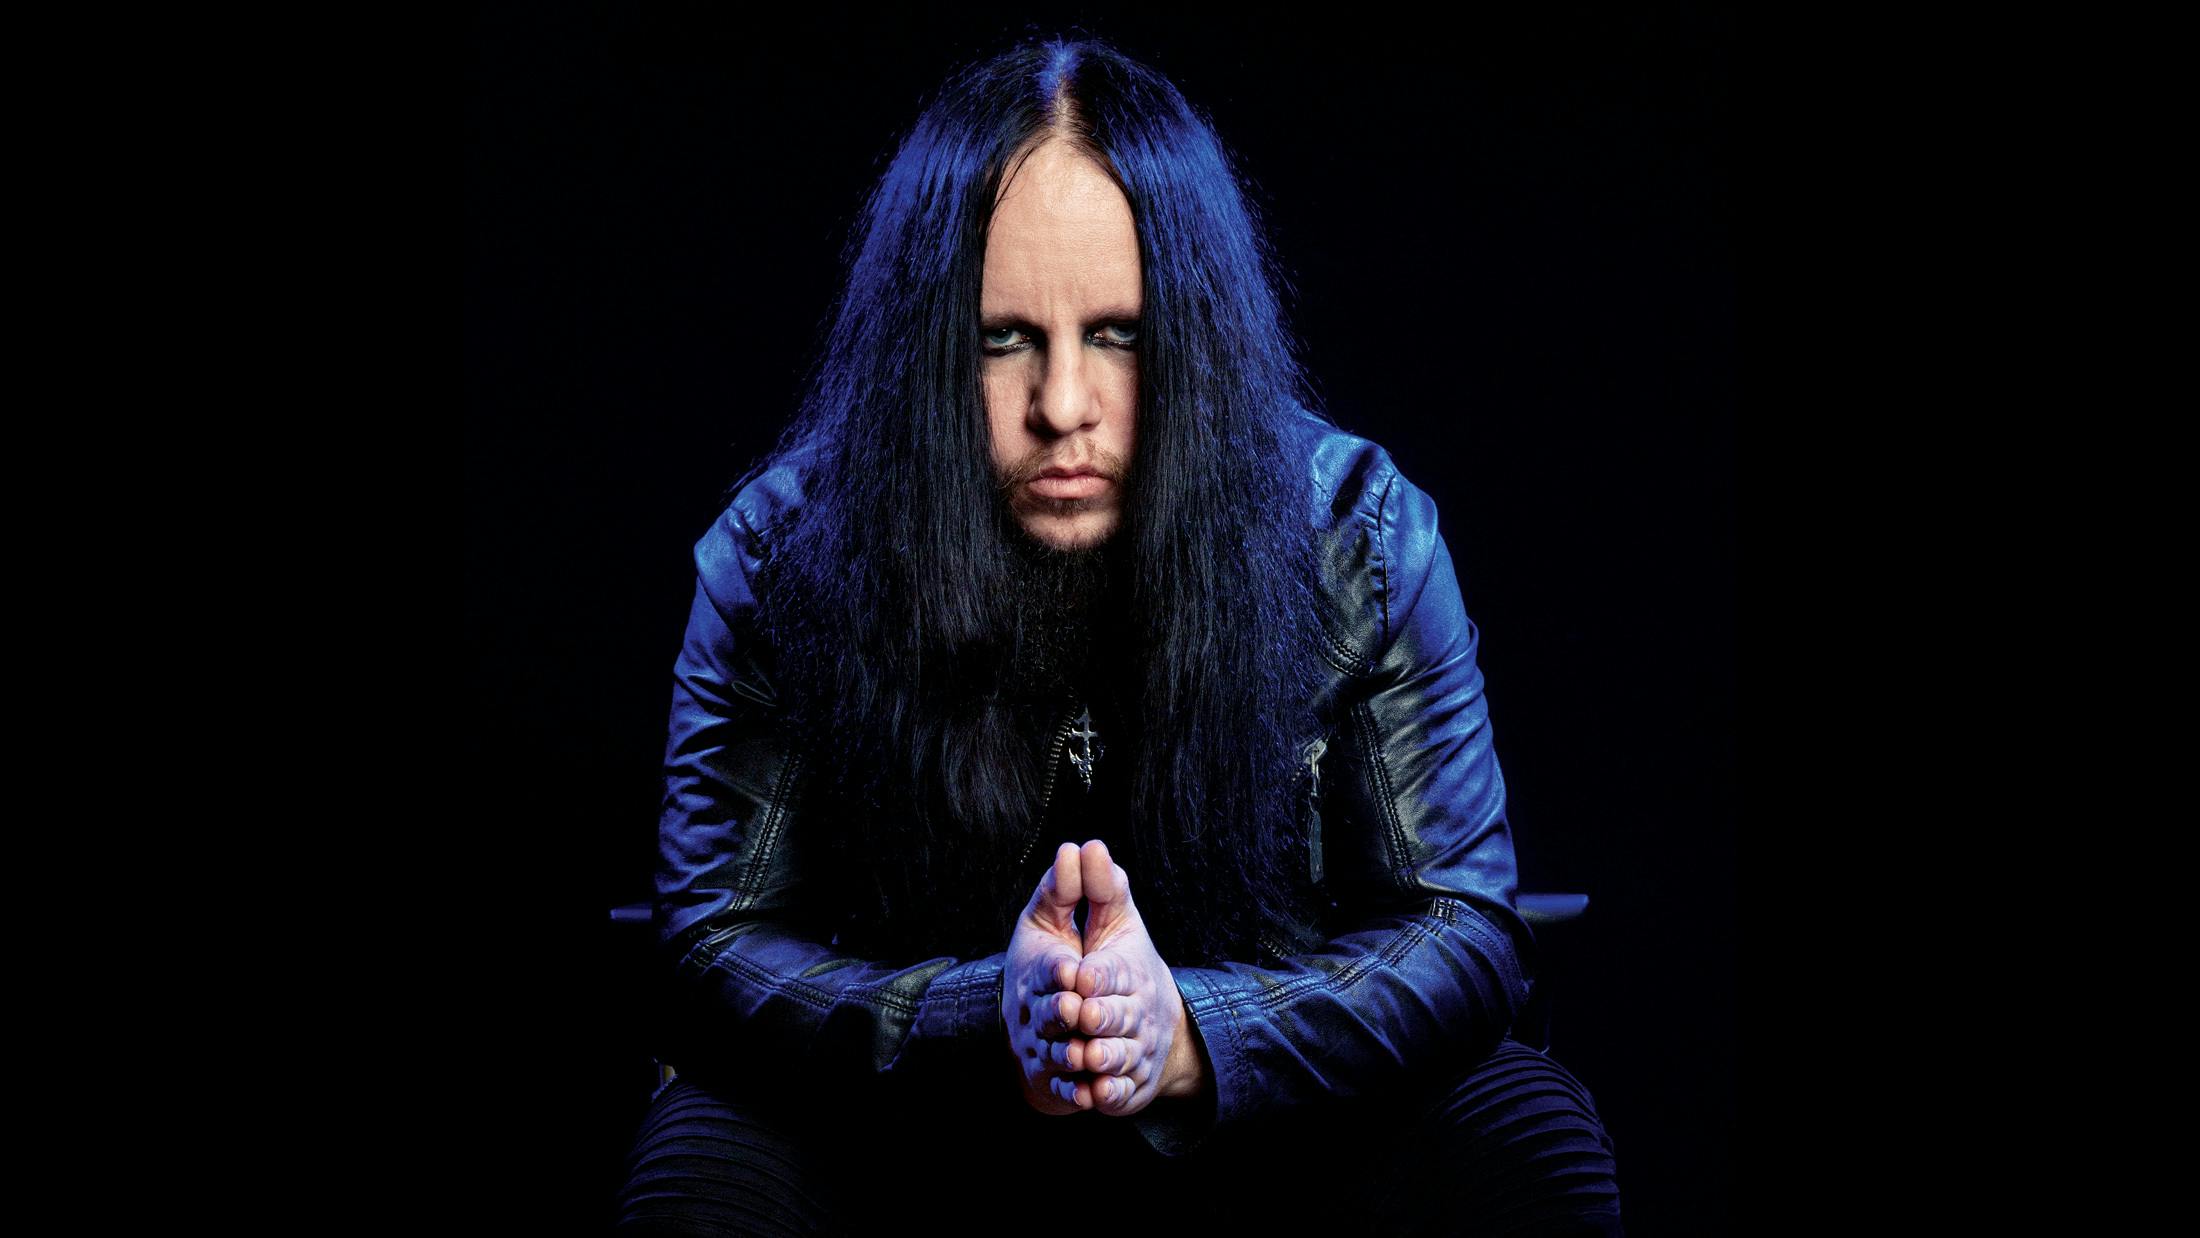 Former Slipknot drummer Joey Jordison has died